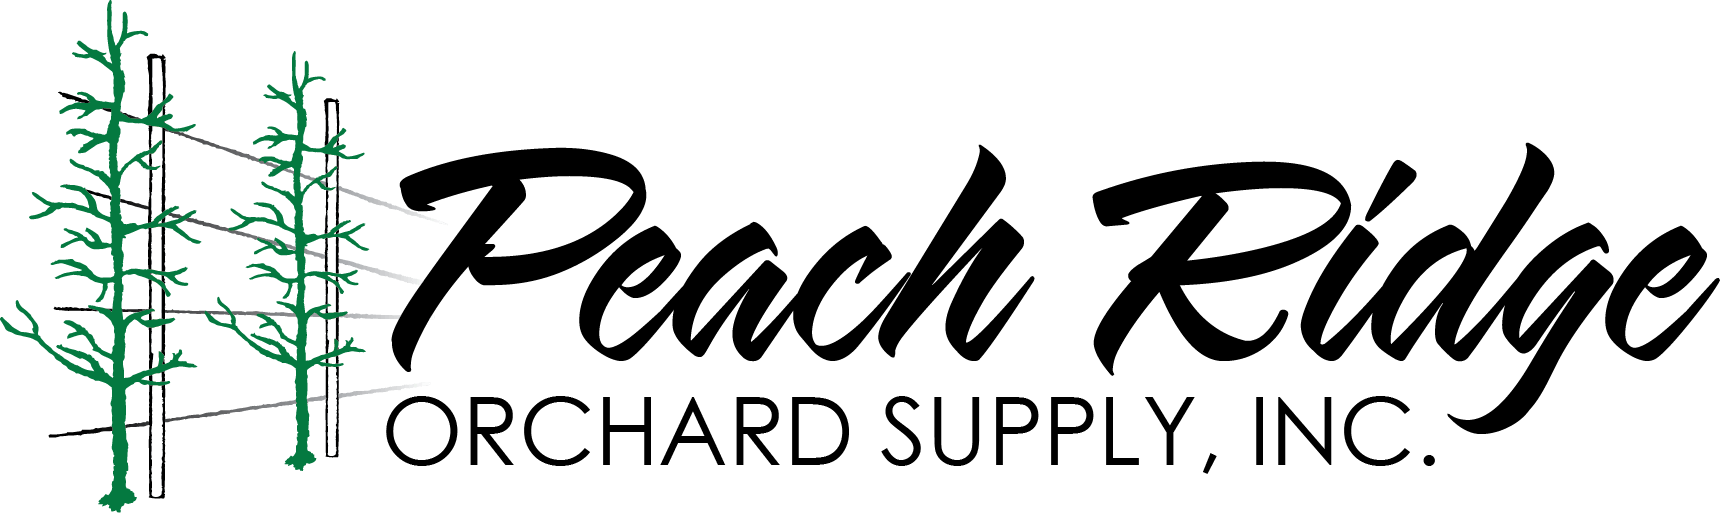 Orchard Supply Logo - PEACH RIDGE Peach Ridge Orchard Supply - Professional Pruning and ...